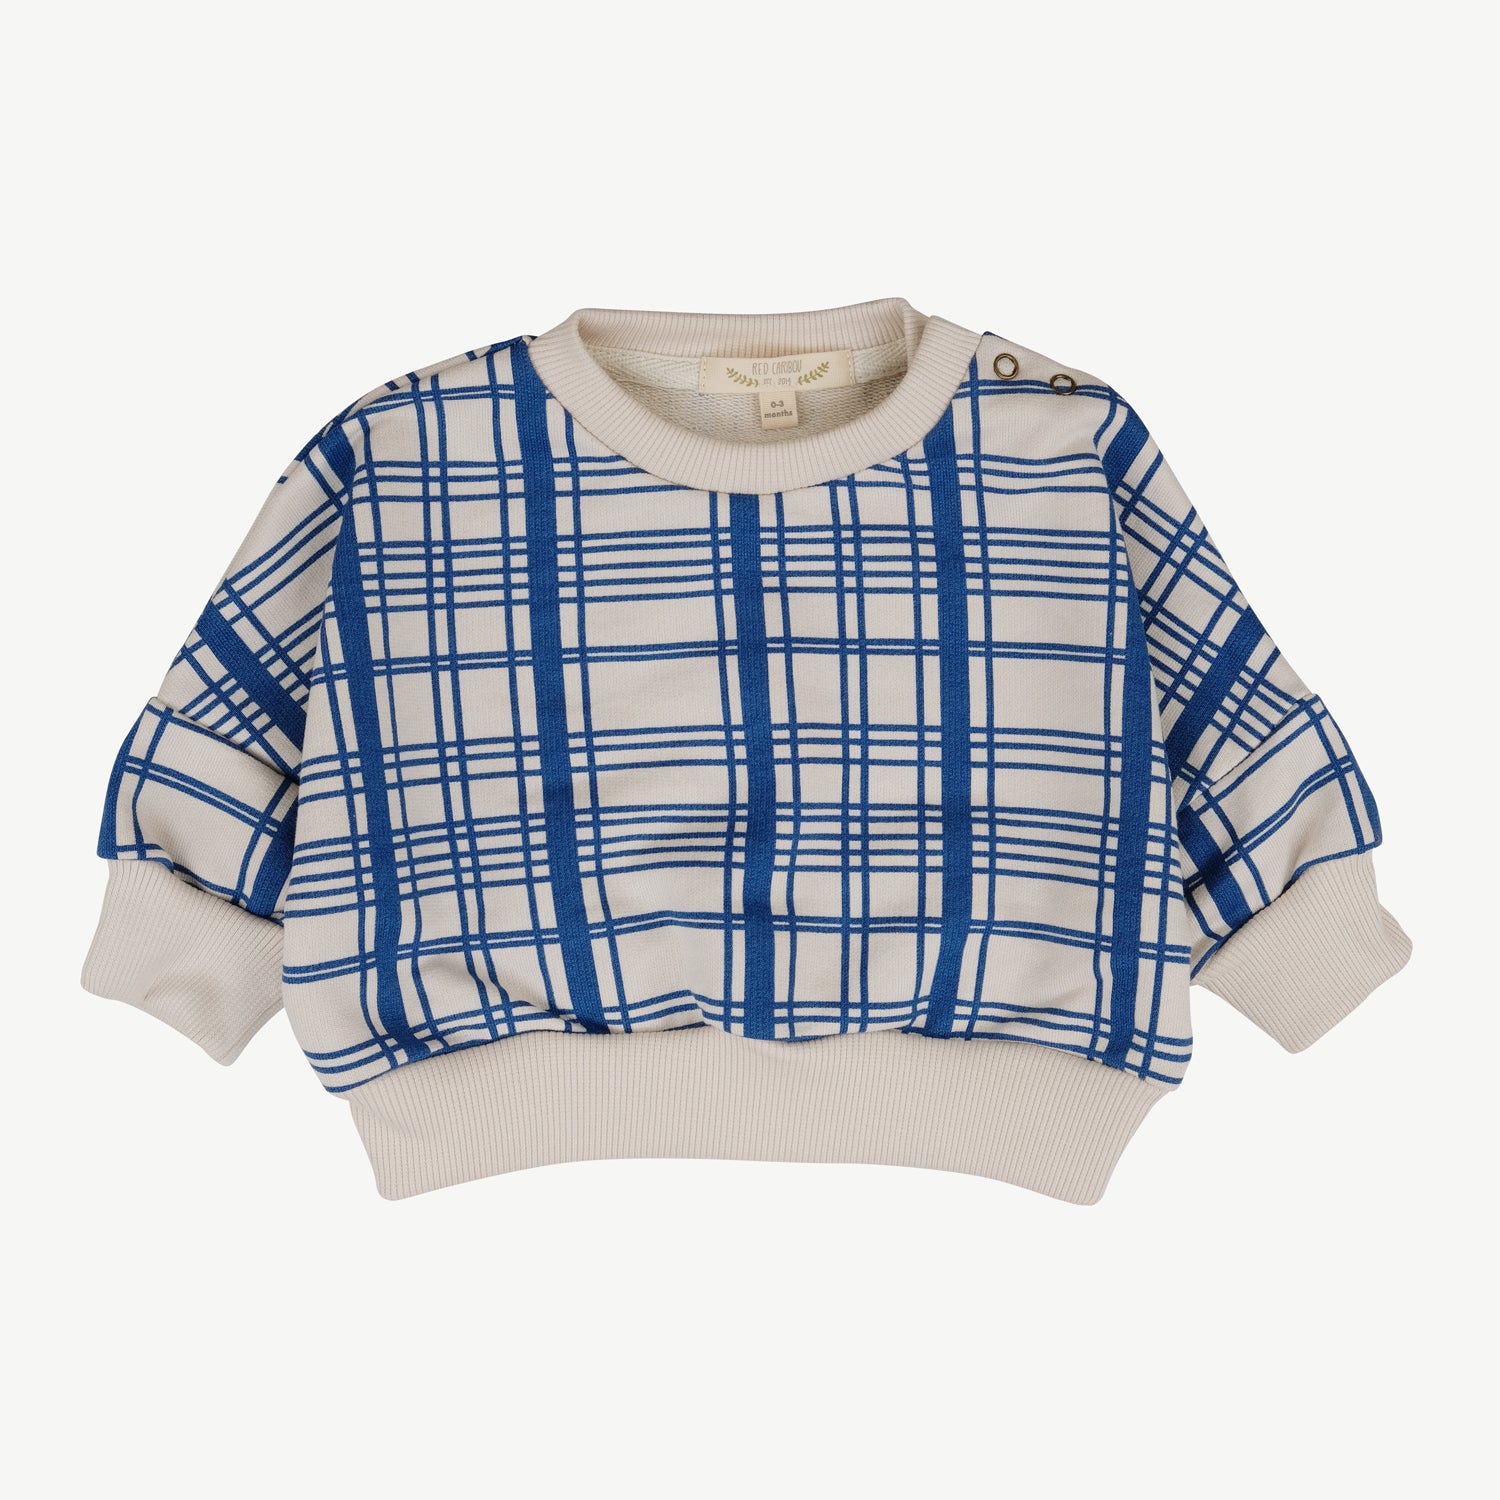 'winter checks dark blue' white sand sweatshirt + joggers baby outfit